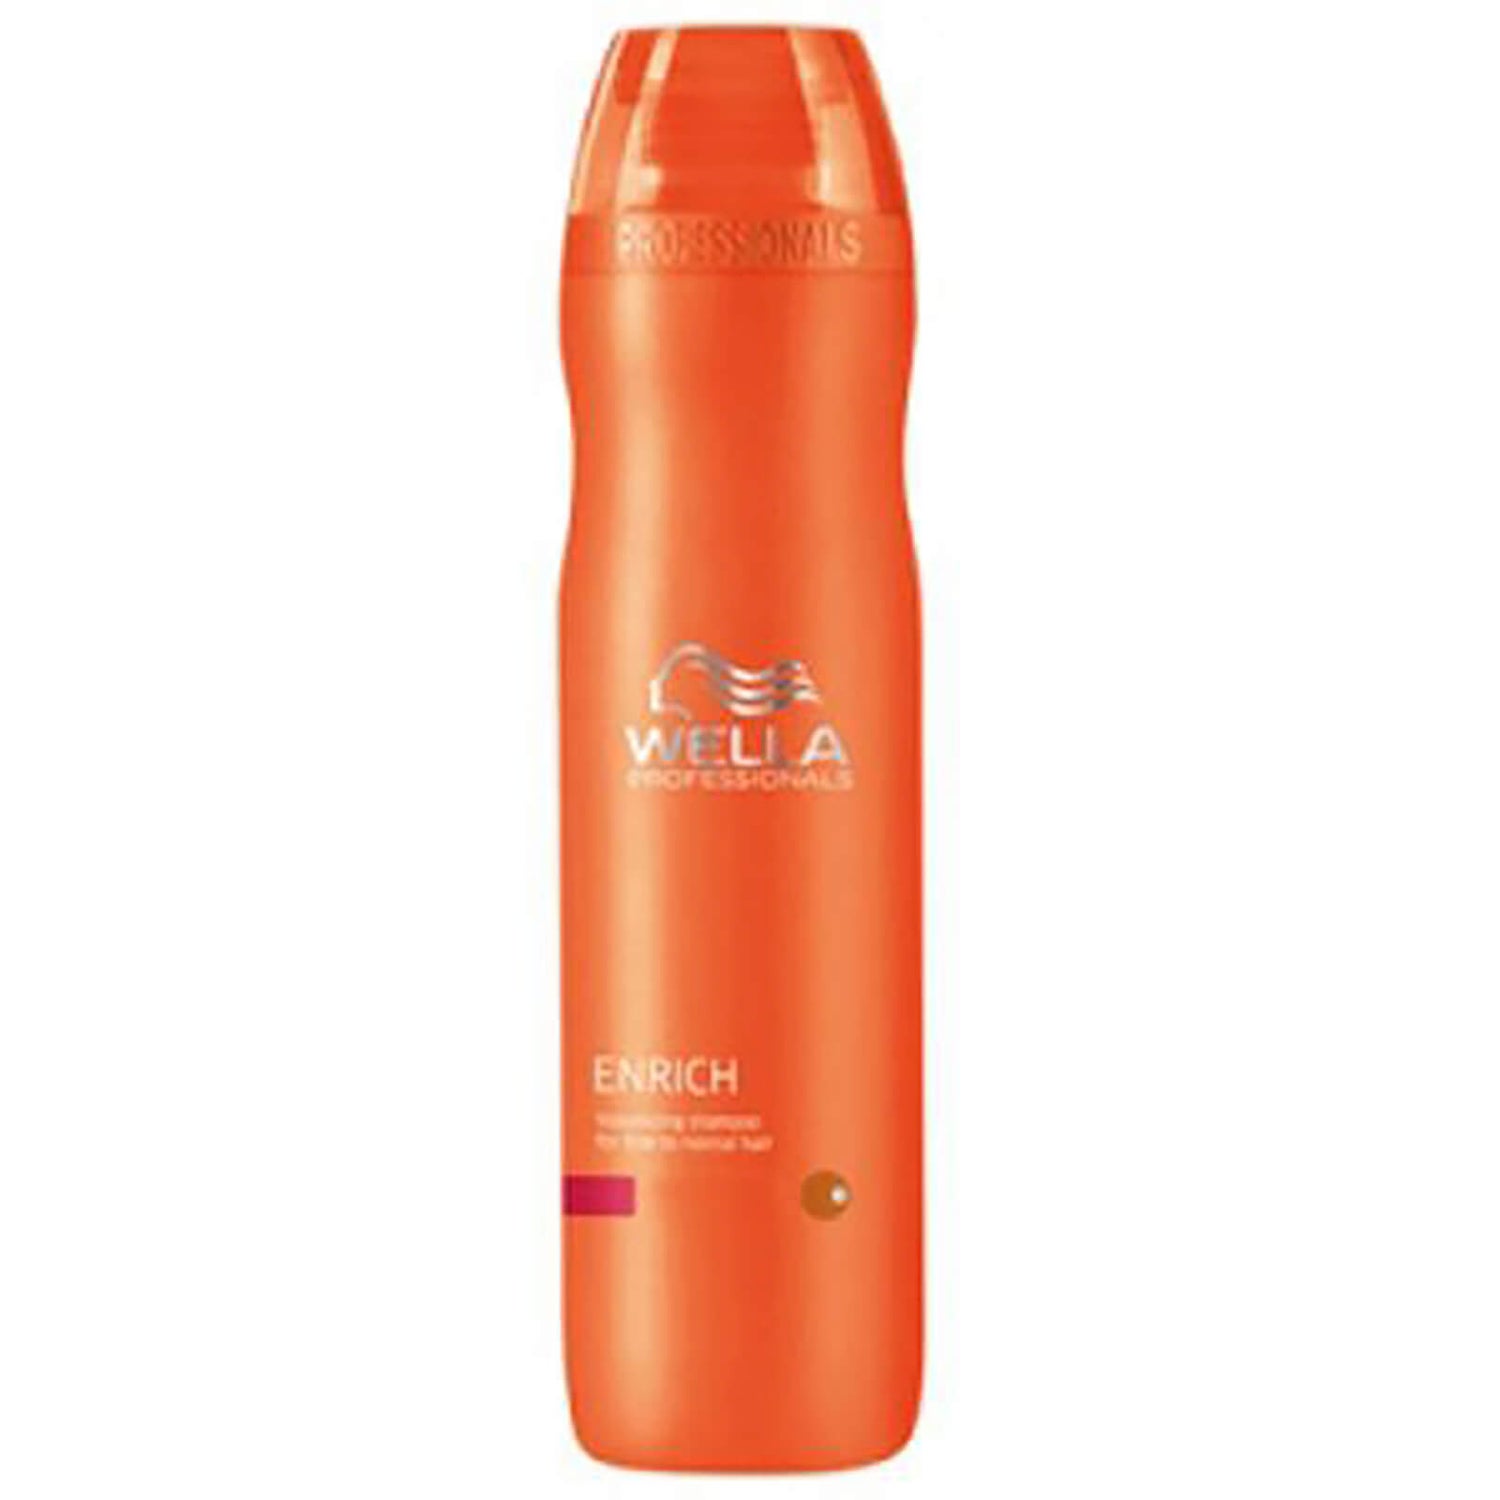 Wella 威娜專業滋養增發洗髮露 - 適合纖弱髮質和普通髮質 (250ml)